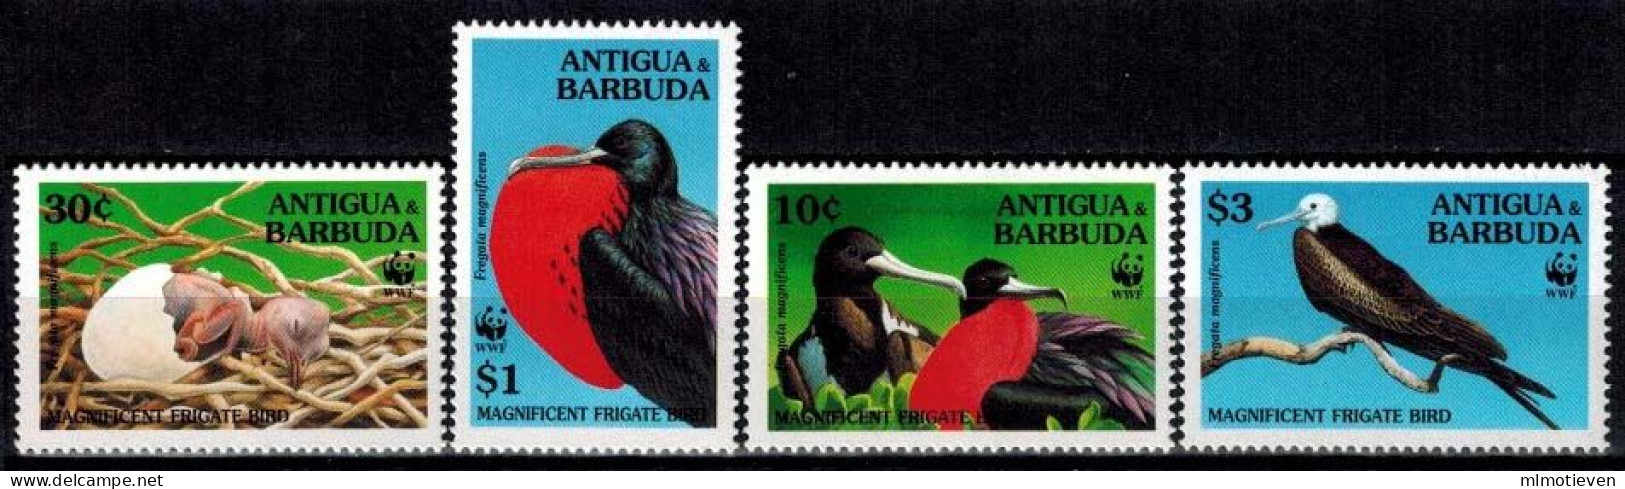 MDB-BK8-578 MDW MINT ¤ ANTIGUA & BARBUDA 1994 4w In Serie ¤ FRIGATE BIRD - OISEAUX - BIRDS - AVES - VOGELS - VÖGEL - - Palmípedos Marinos